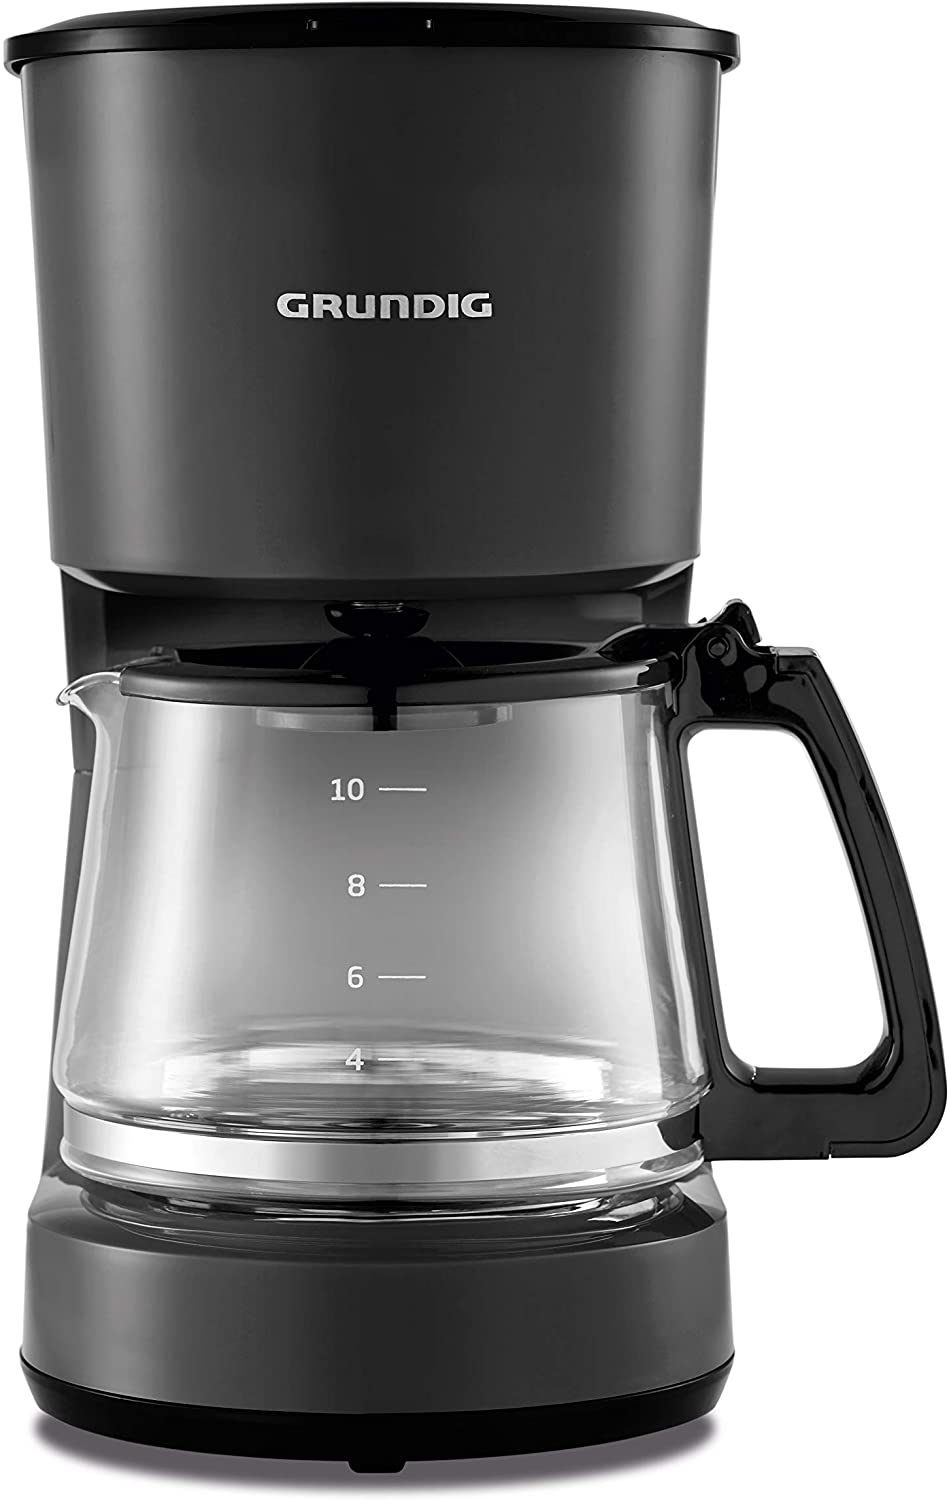 Grundig KM 4620 Black Capacity 10 Cups Glass Jug Coffee Maker – Keeps Warm for